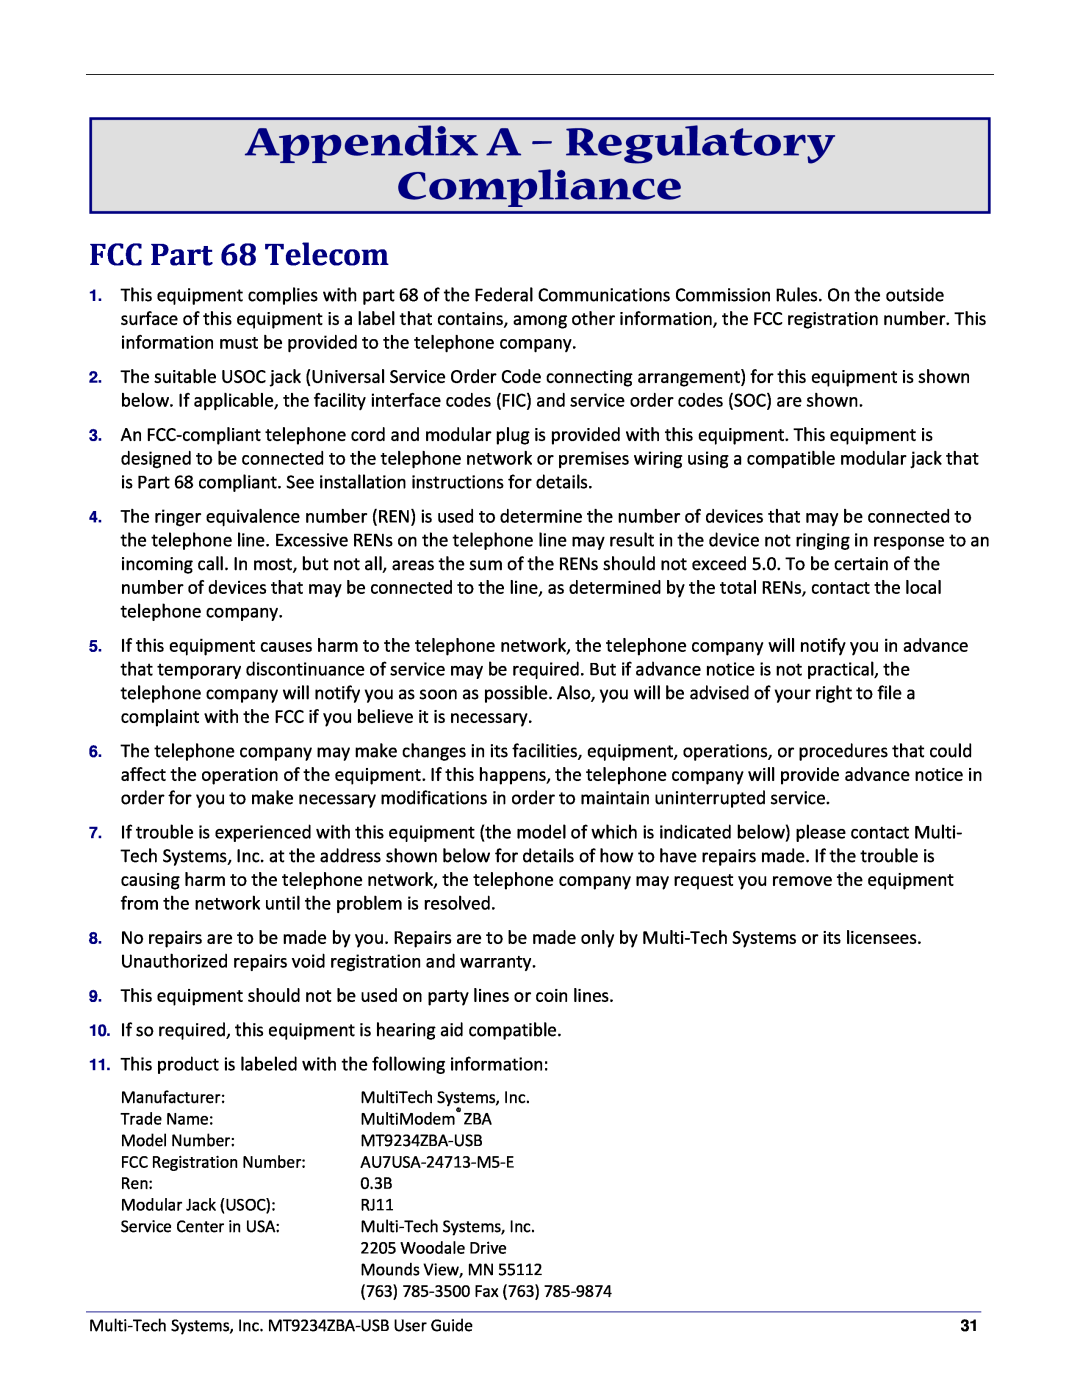 Multitech MT9234ZBA-USB manual Appendix A - Regulatory Compliance, FCC Part 68 Telecom 